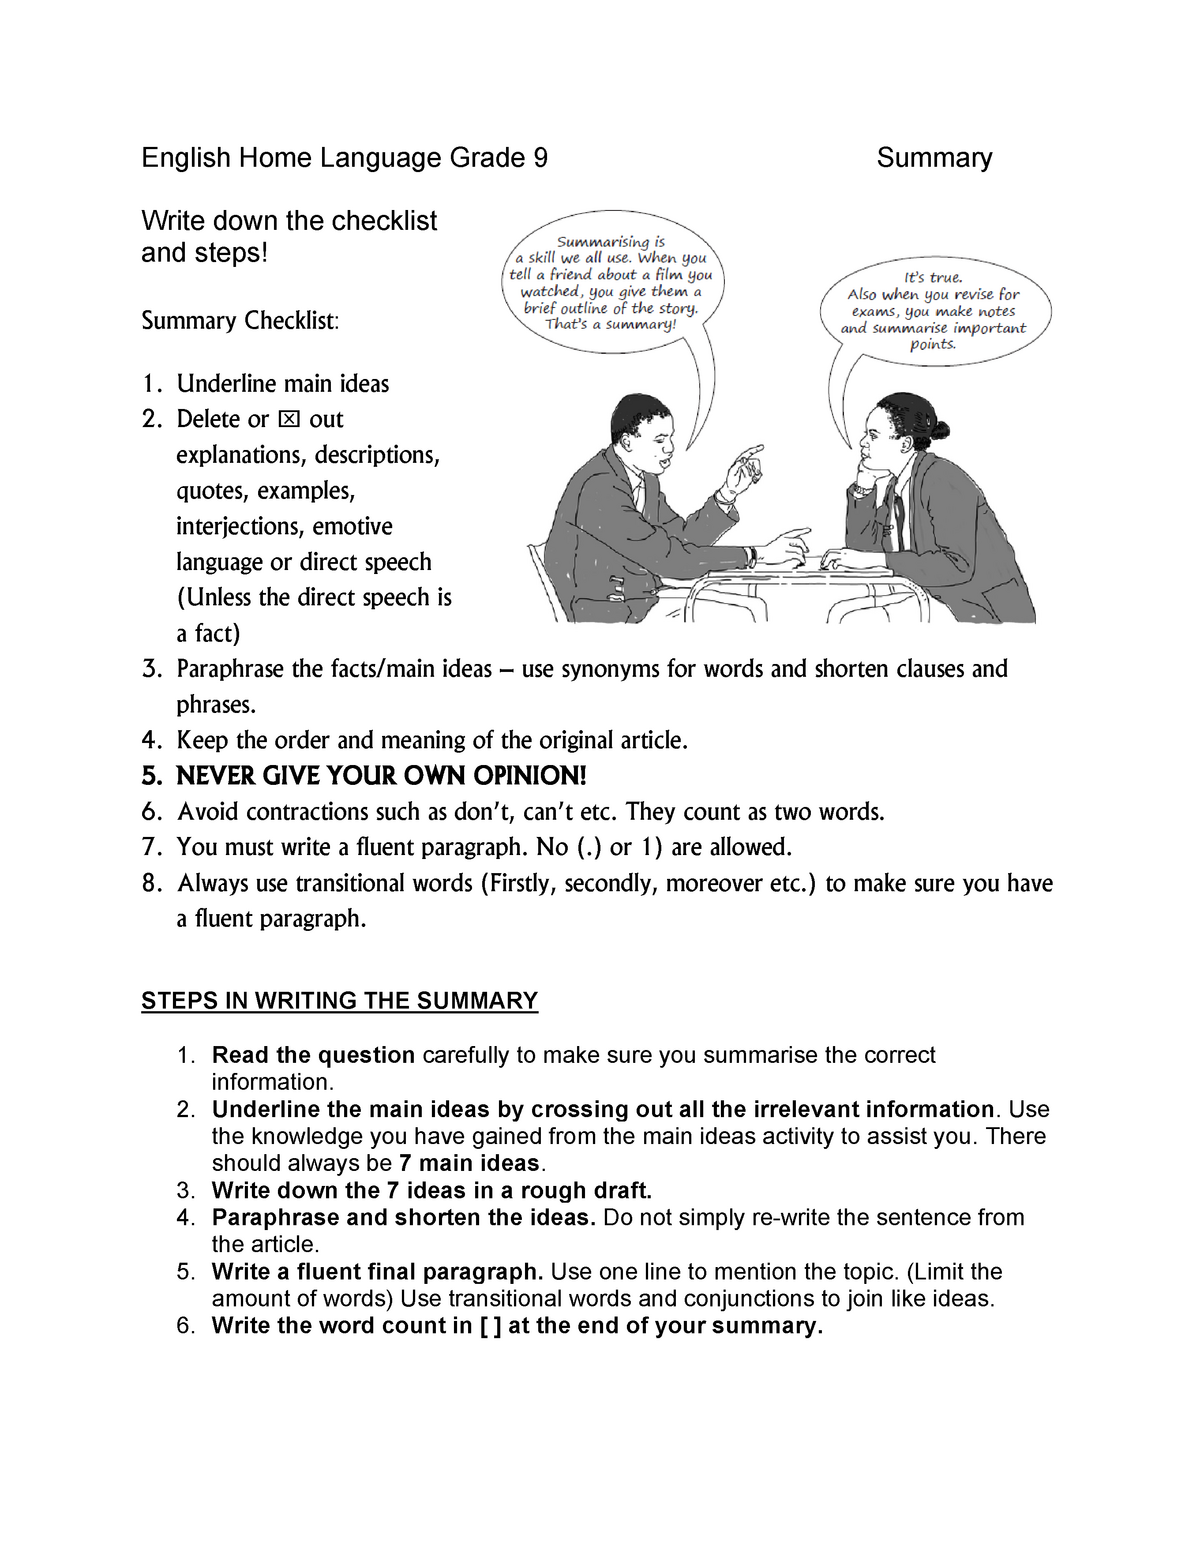 grade-9-english-hl-summary-worksheet-english-home-language-grade-9